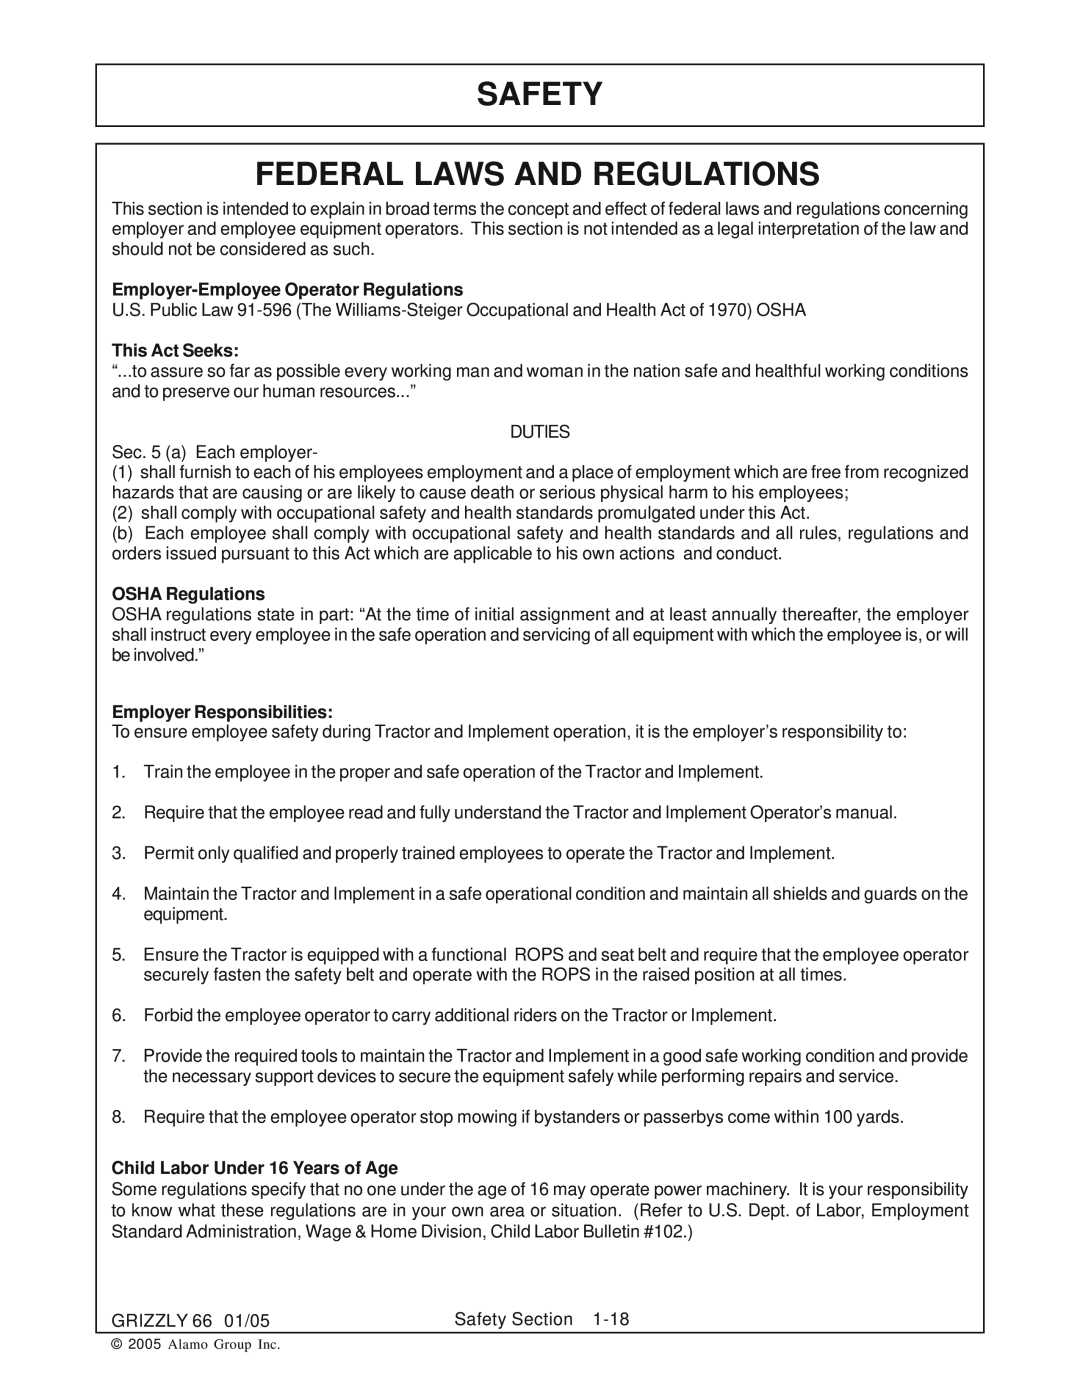 Alamo 66 Safety Federal Laws And Regulations, Employer-Employee Operator Regulations, This Act Seeks, OSHA Regulations 